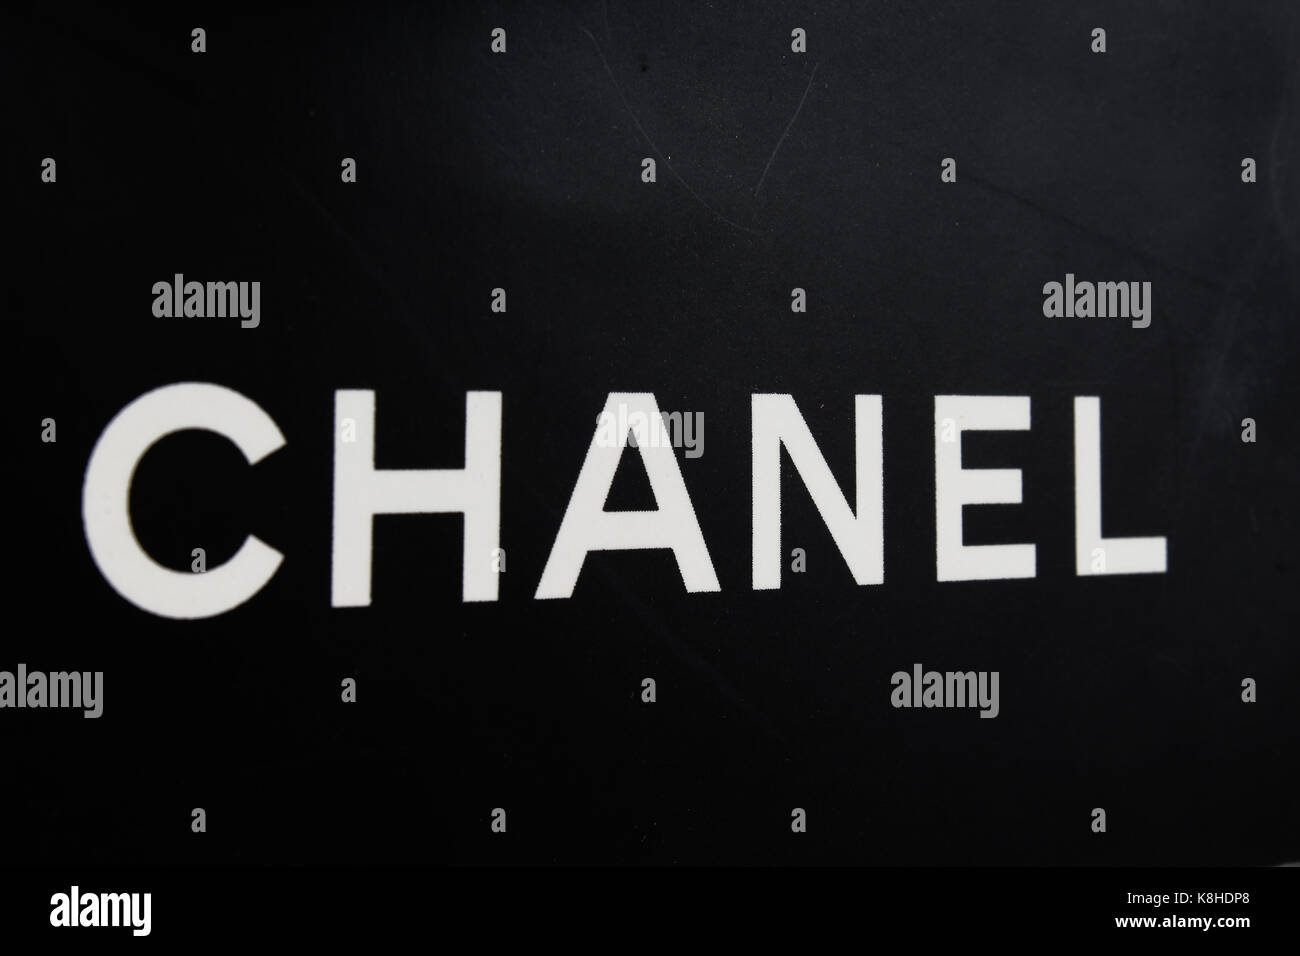 Chanel logo on black background Stock Photo - Alamy